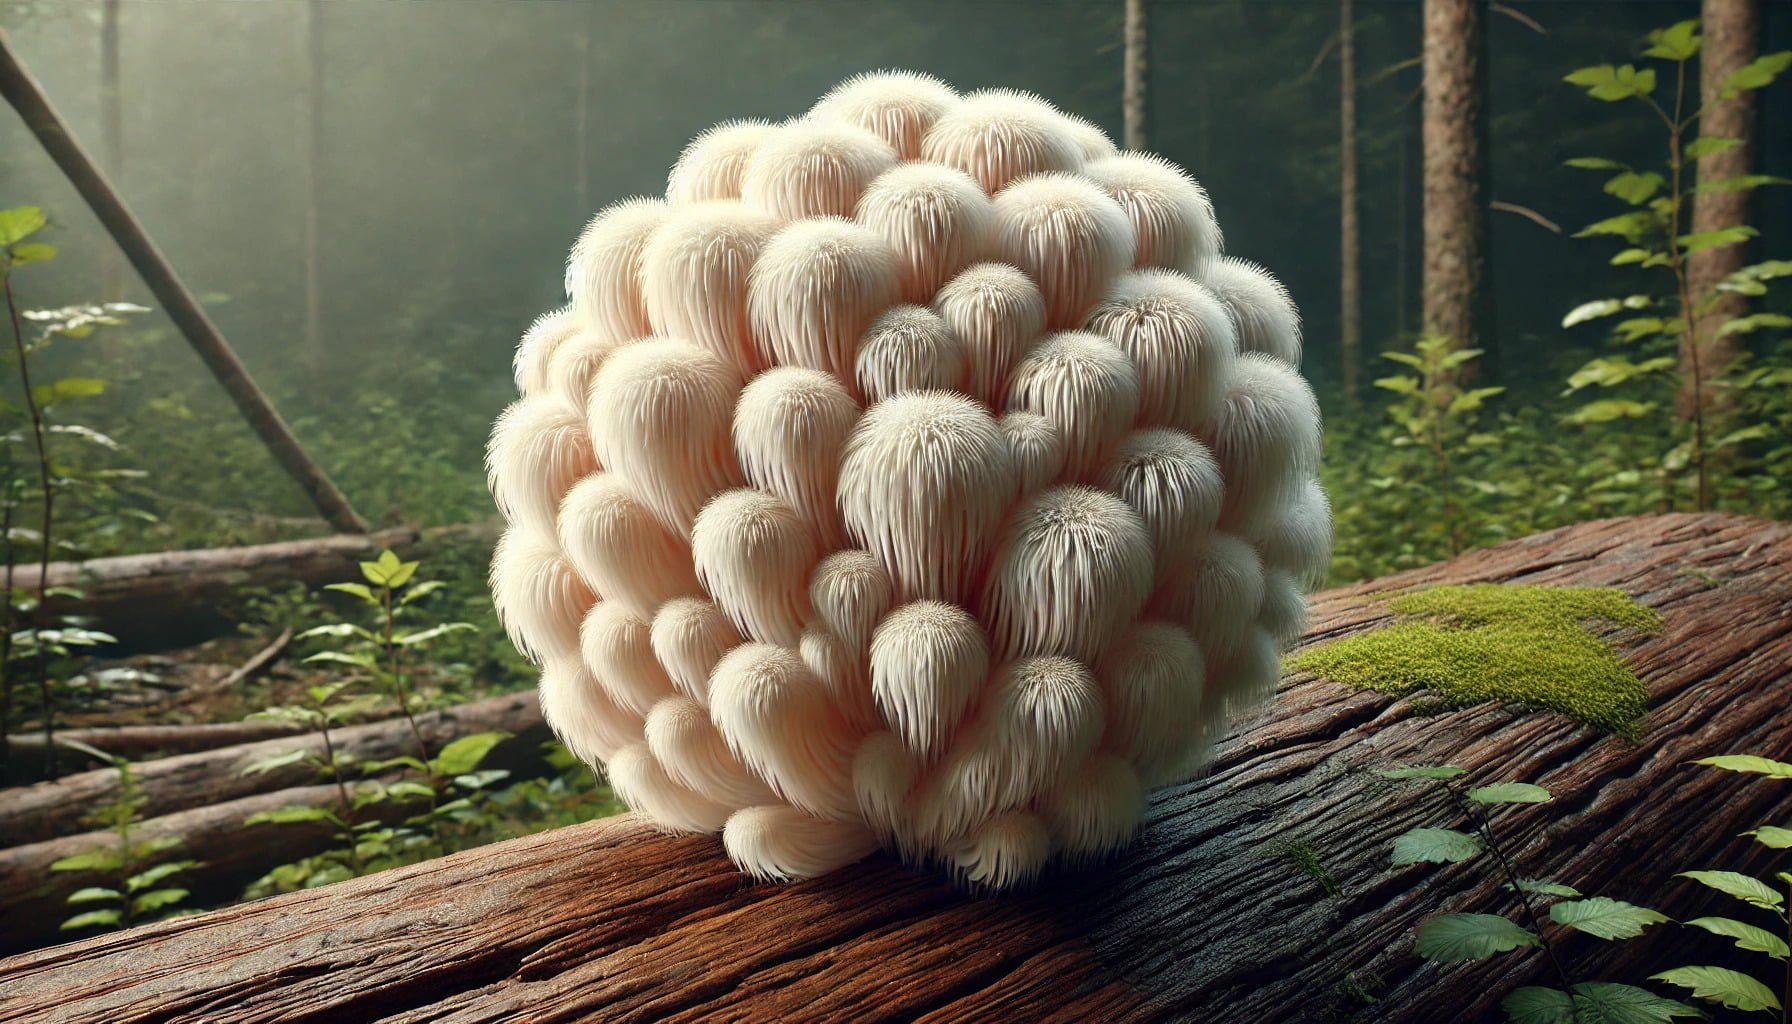 A photorealistic image of lions mane mushroom growing on a log.